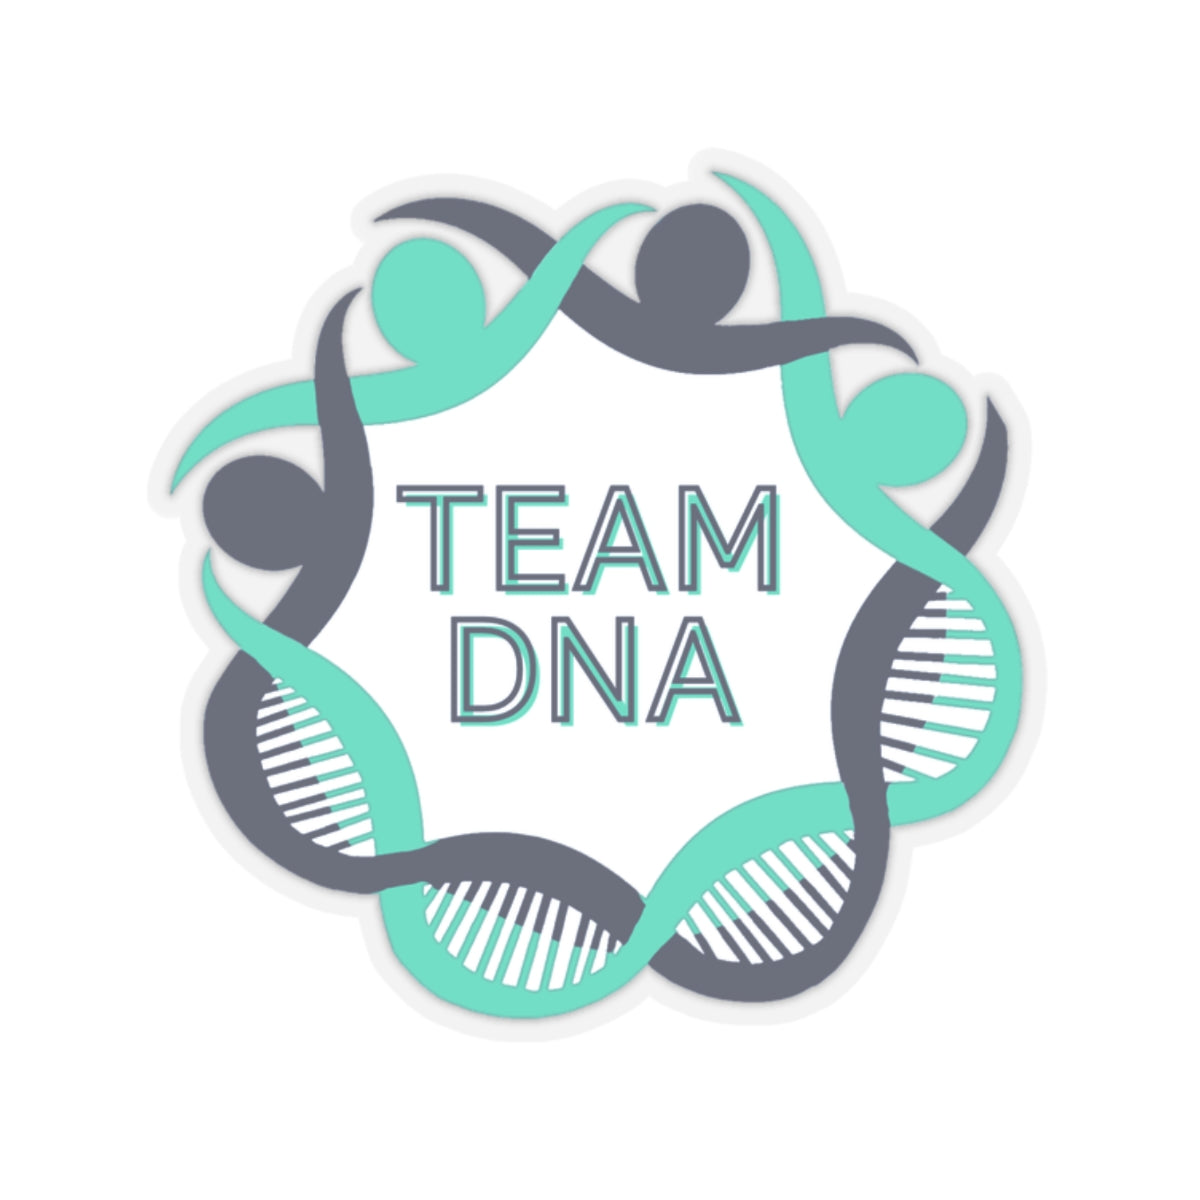 Team DNA - Kiss-Cut Stickers